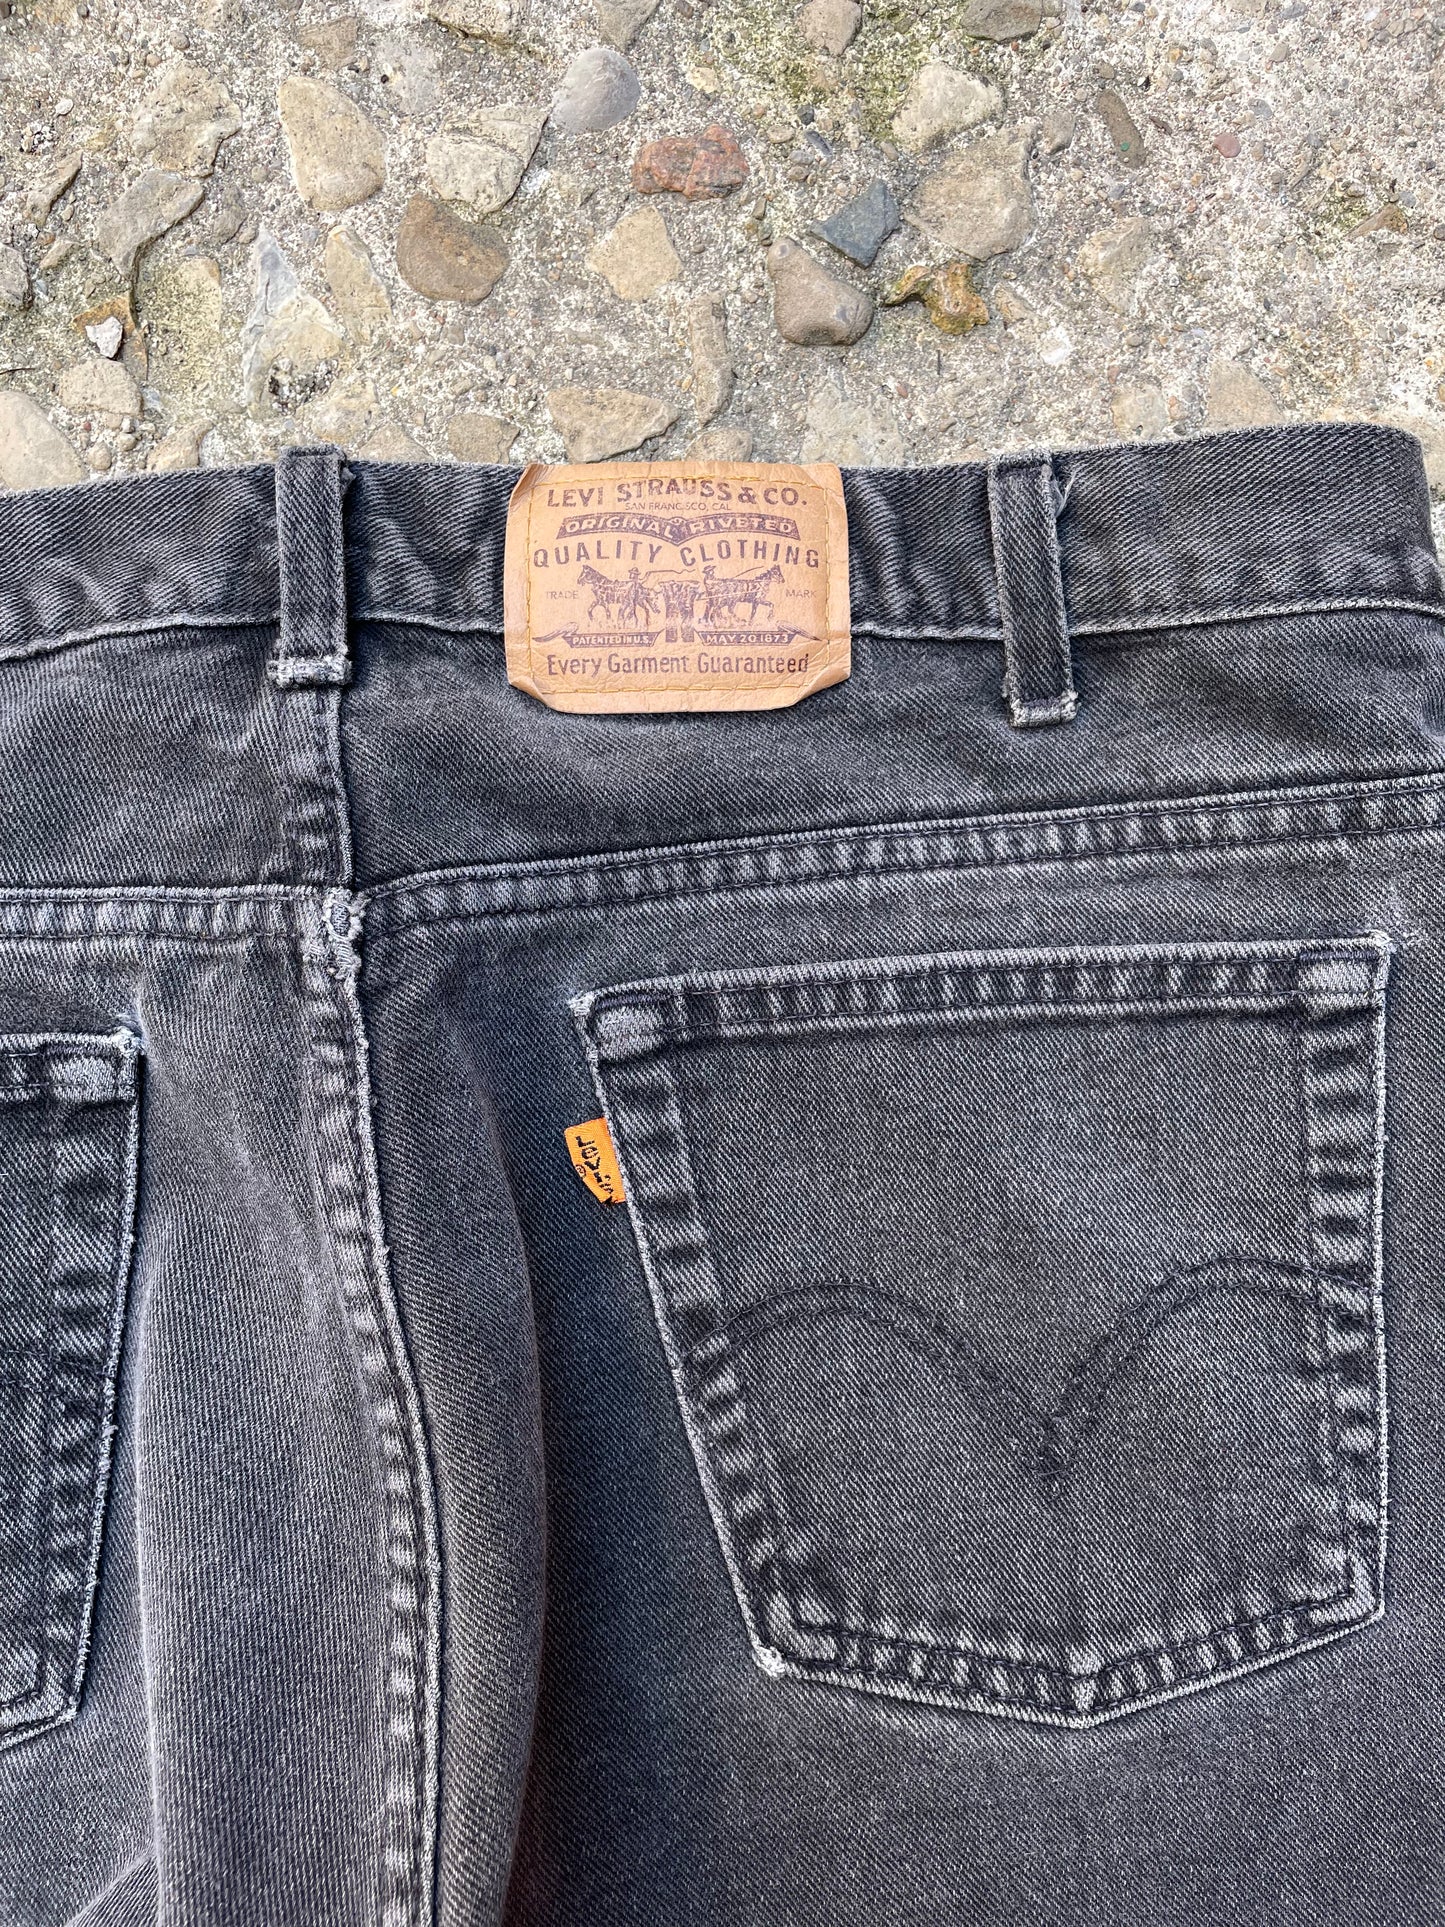 1990's Levi's 619 Orange Tab Faded Black Denim Jeans - 37